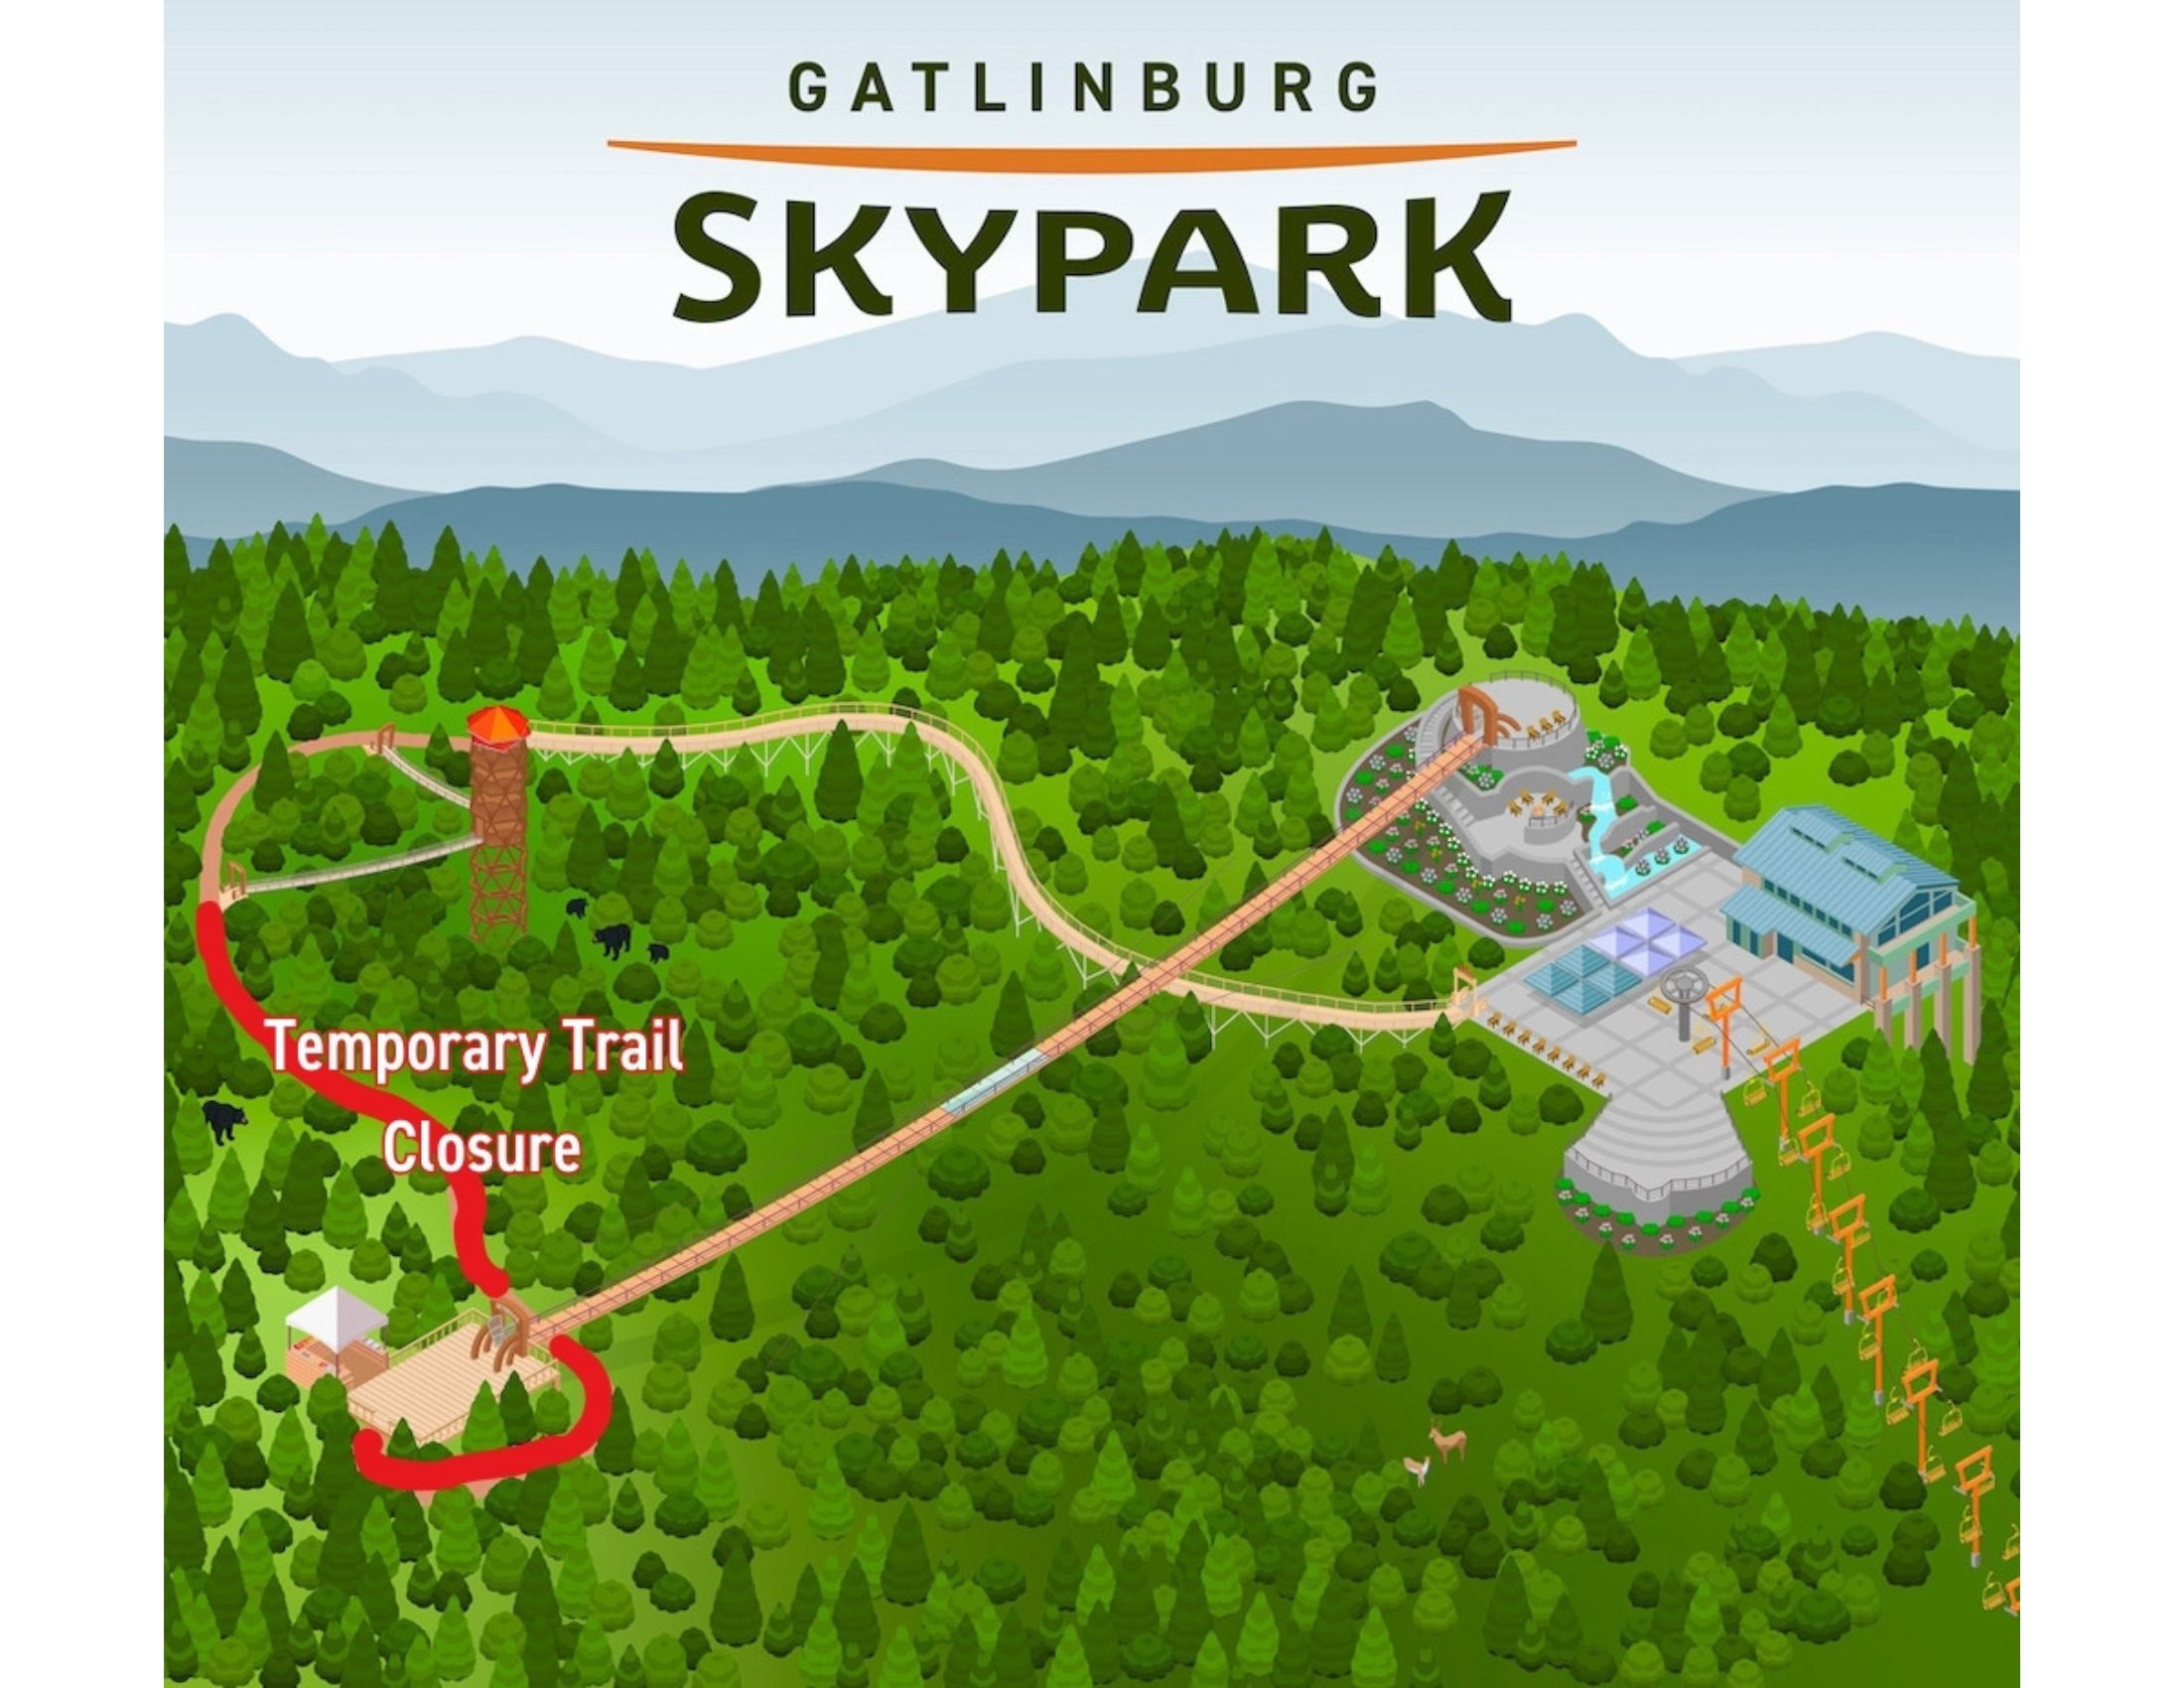 Gatlinburg SkyPark Map